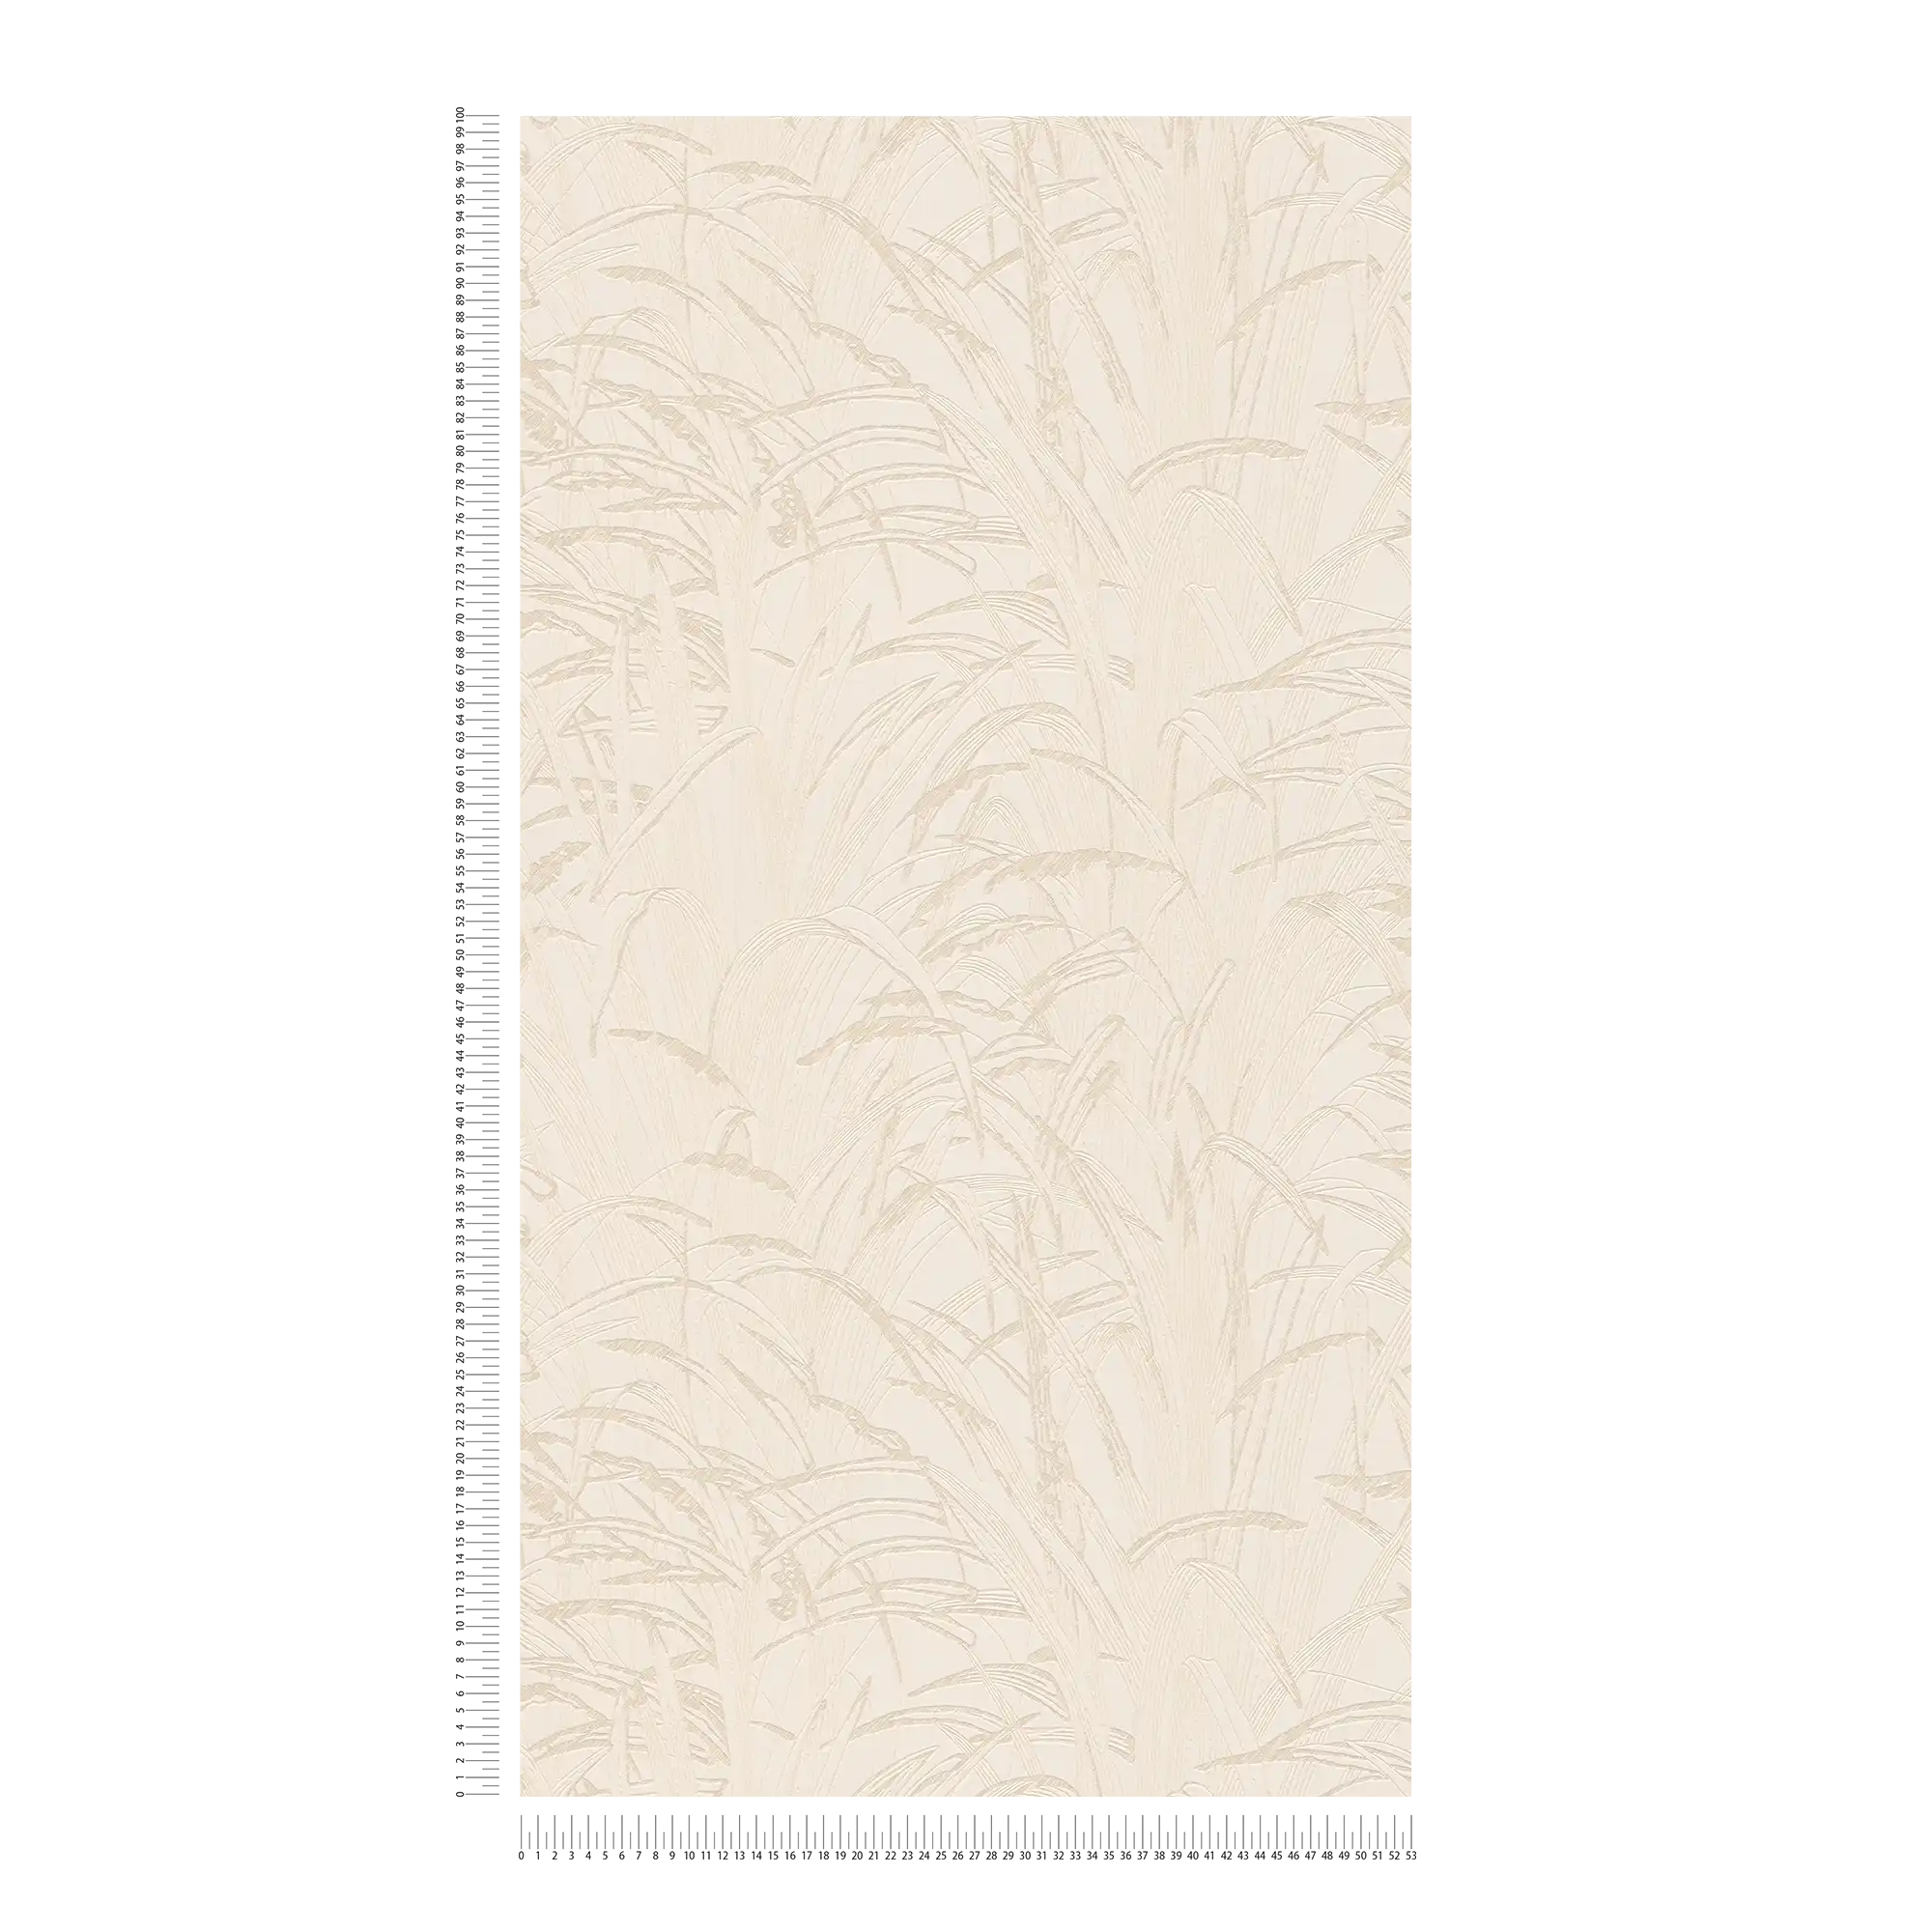             Carta da parati naturale foglie di canna con colore metallico - beige, crema
        